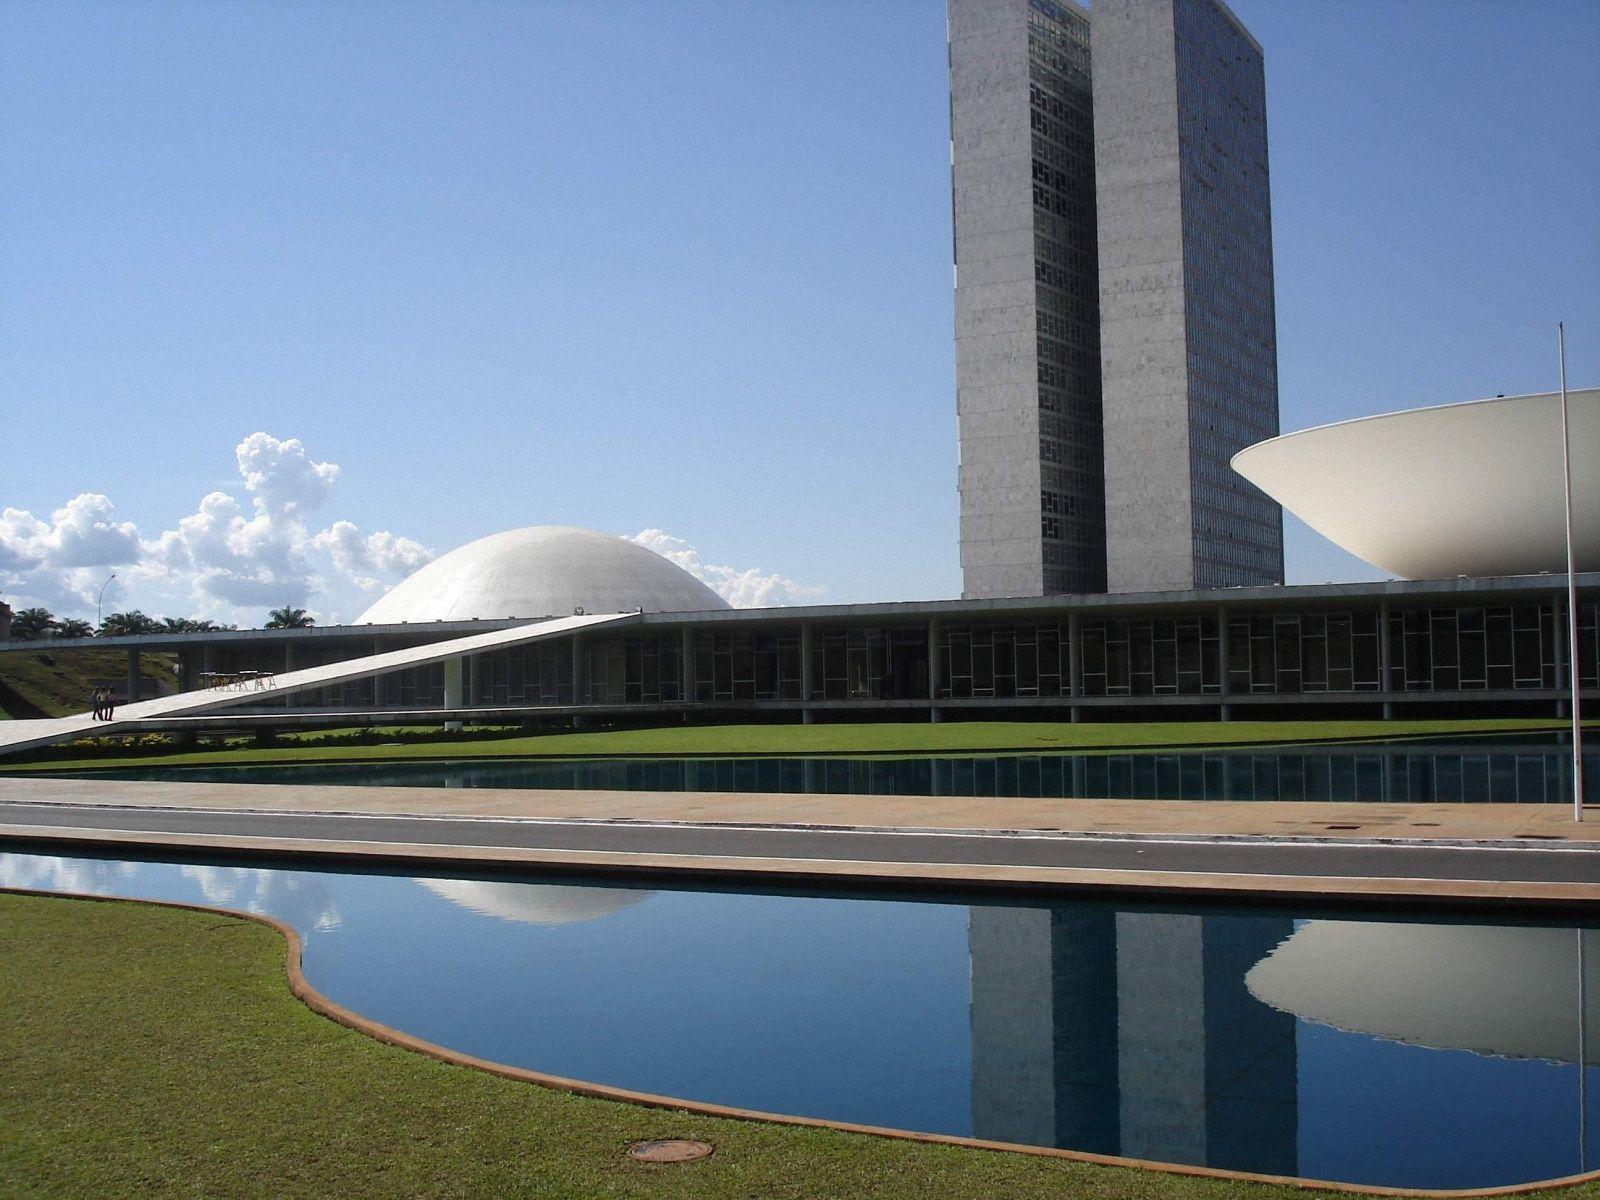 Brasilia City 1600x1200 Wallpaper, Brasilia 1600x1200 Wallpaper